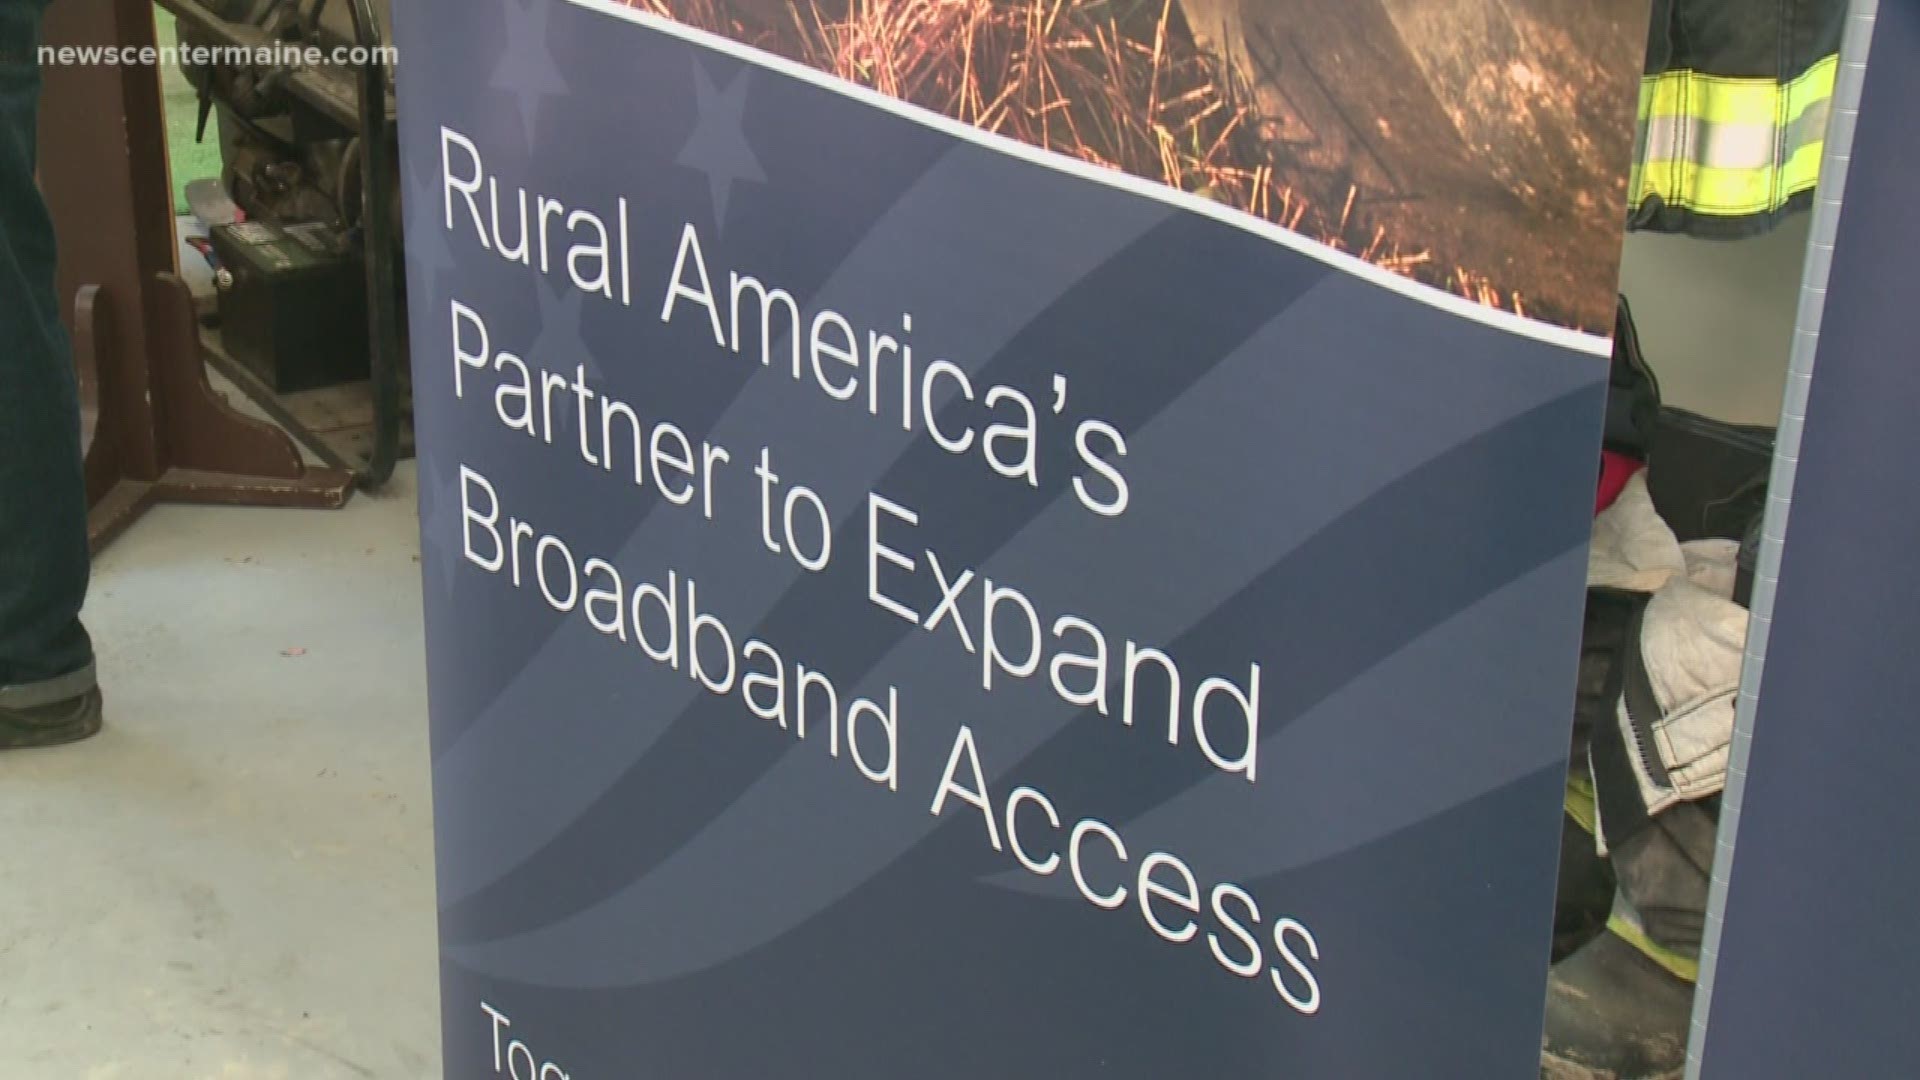 Nearly $10 million for broadband